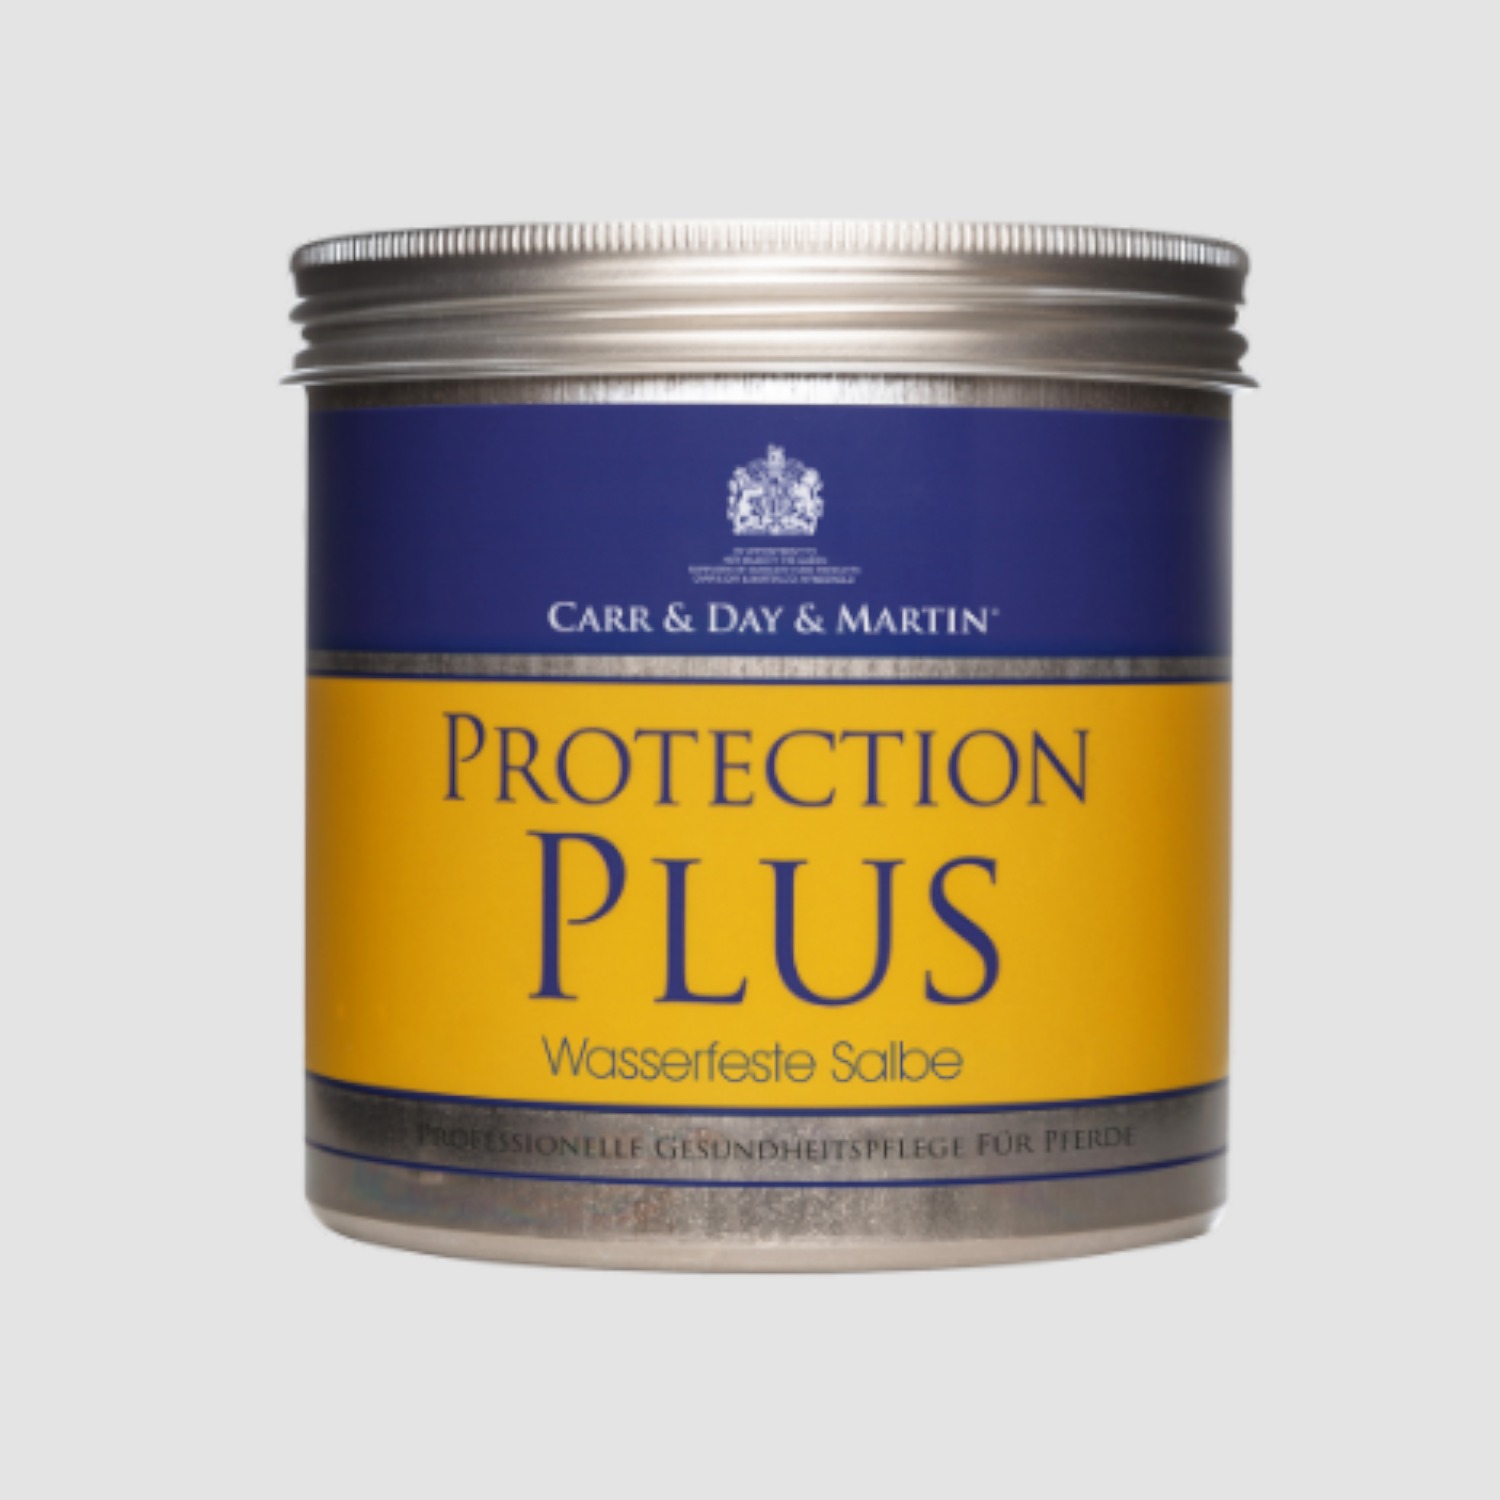 Carr & Day & Martin Protection Plus antibakterielle Salbe